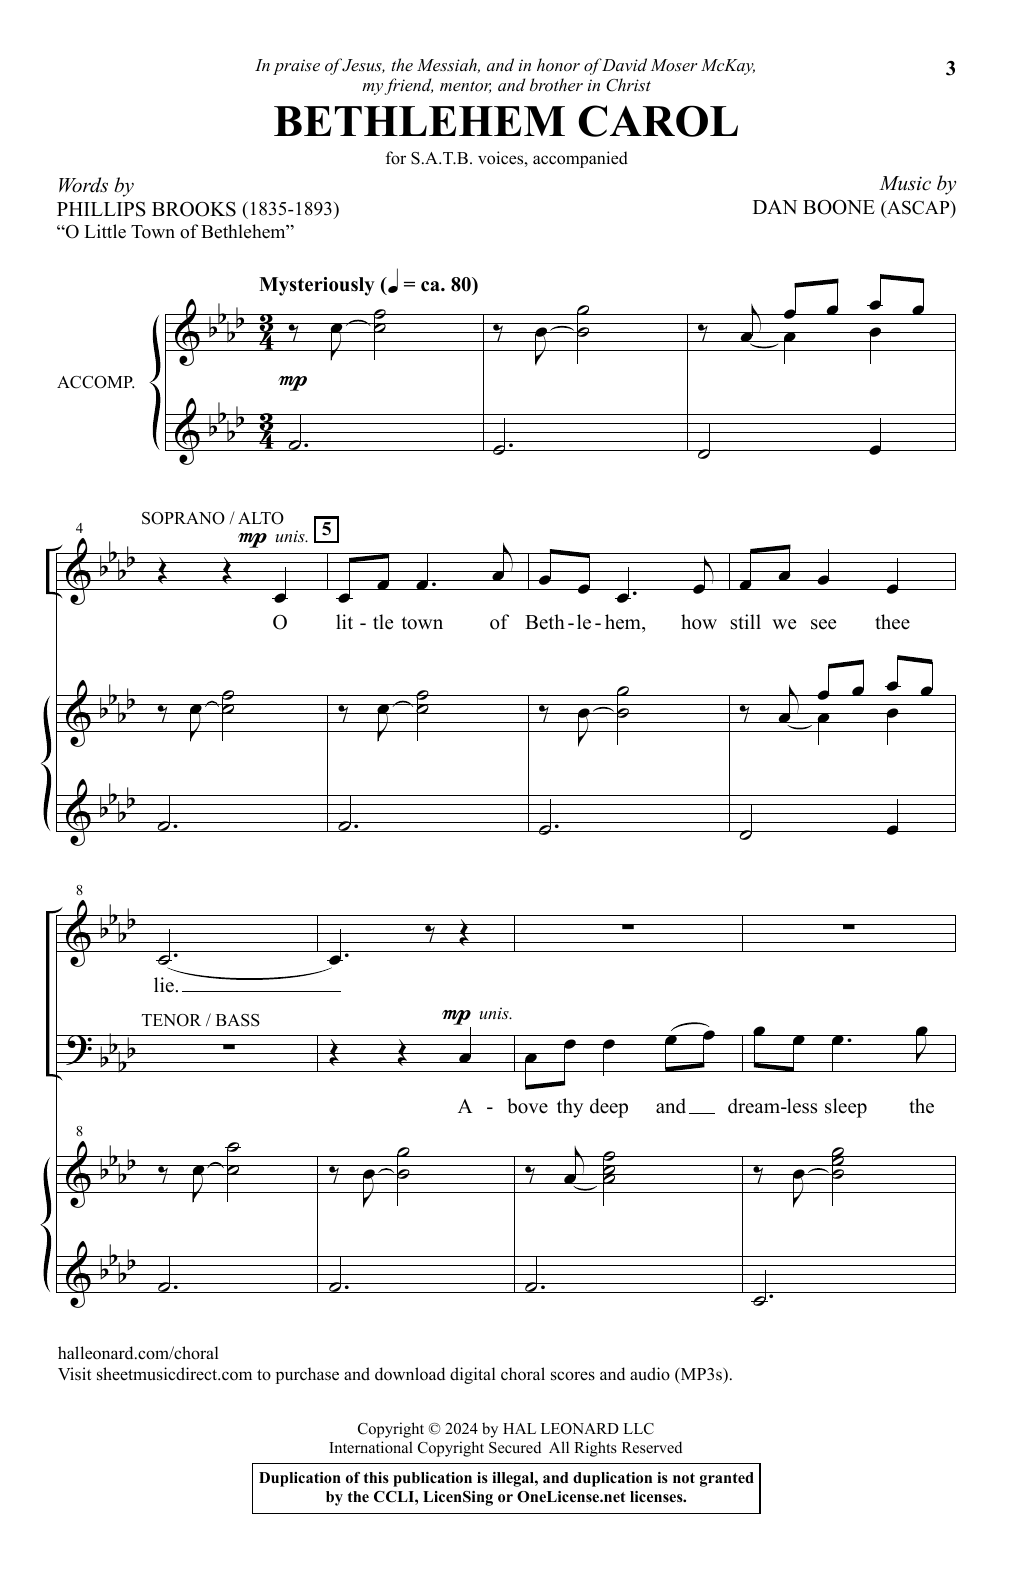 Download Dan Boone Bethlehem Carol Sheet Music and learn how to play SATB Choir PDF digital score in minutes